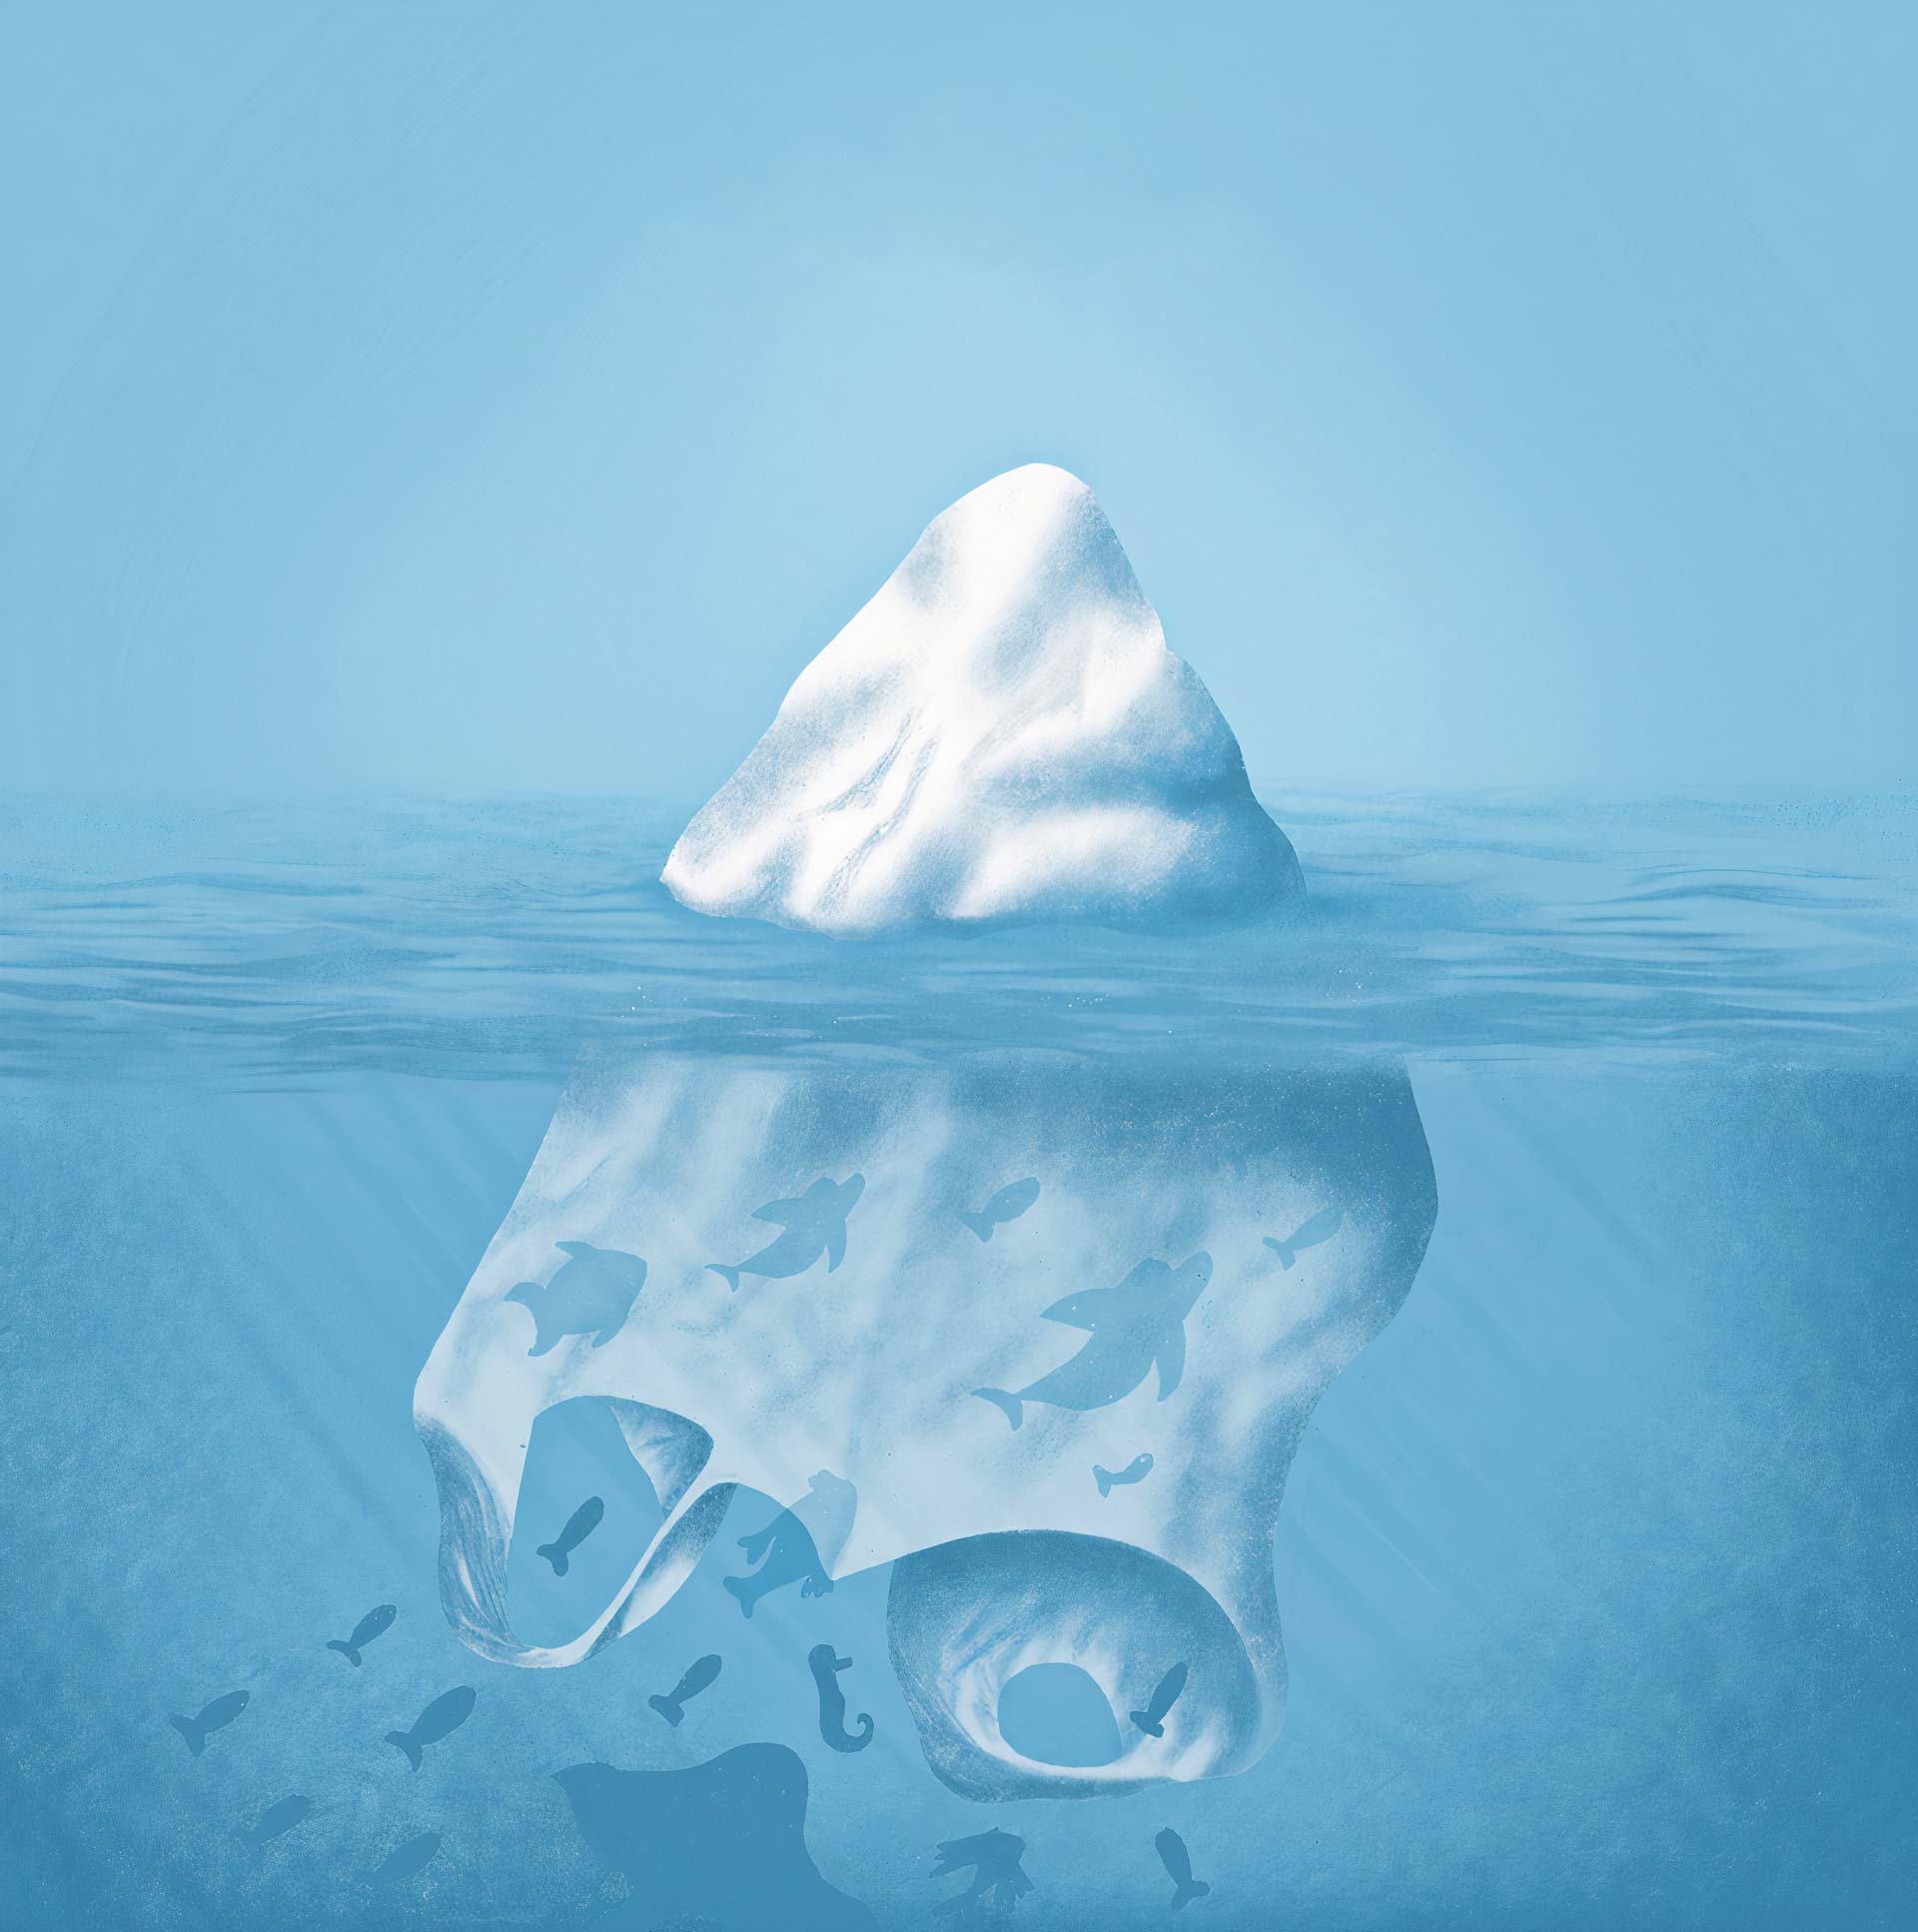 Plastic bag ice berg